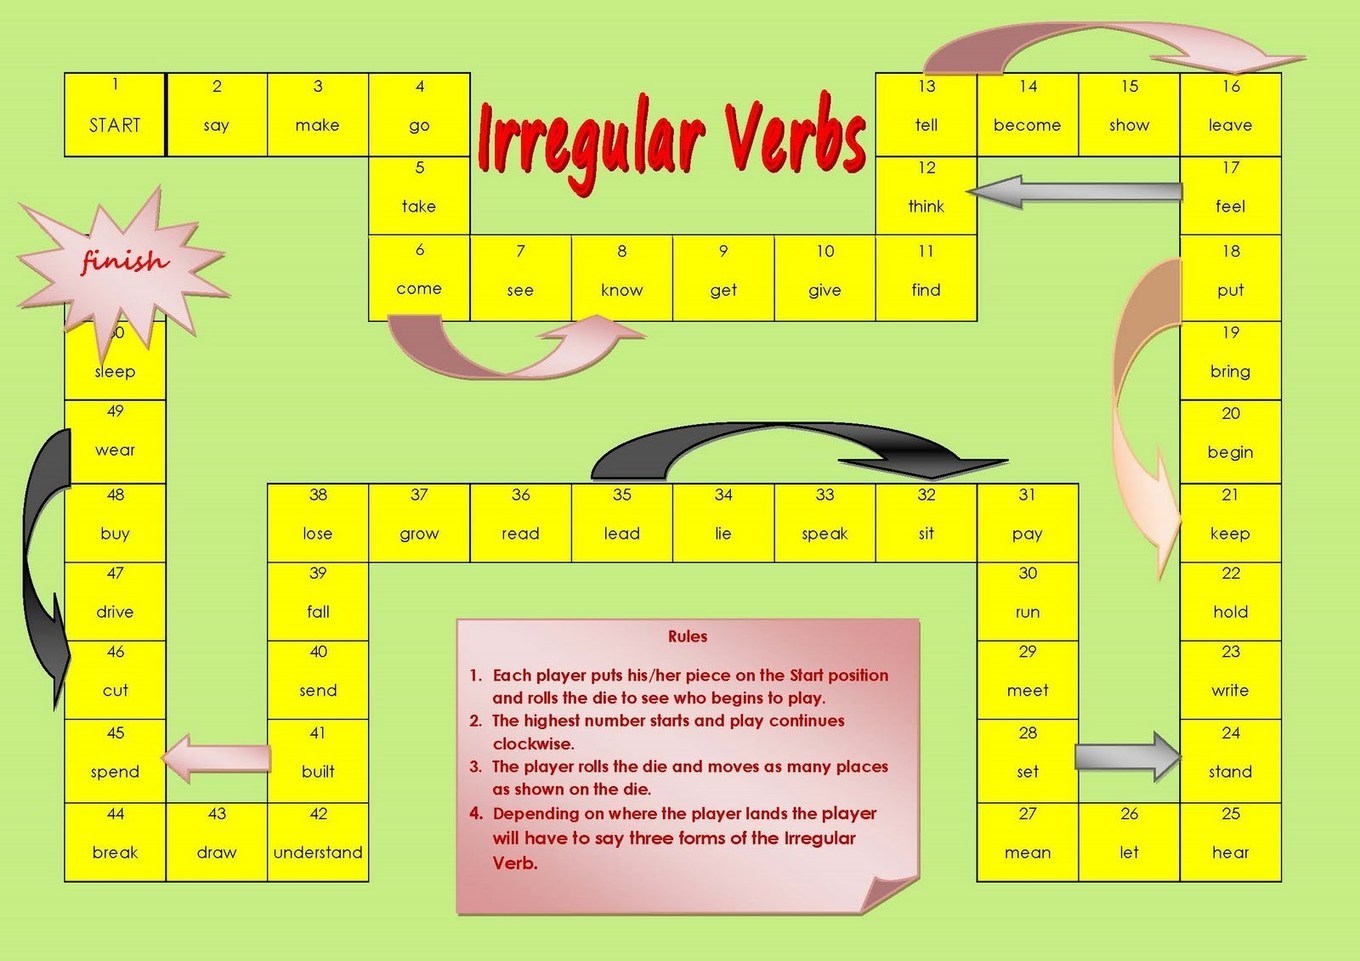 English irregular verbs - Wikipedia